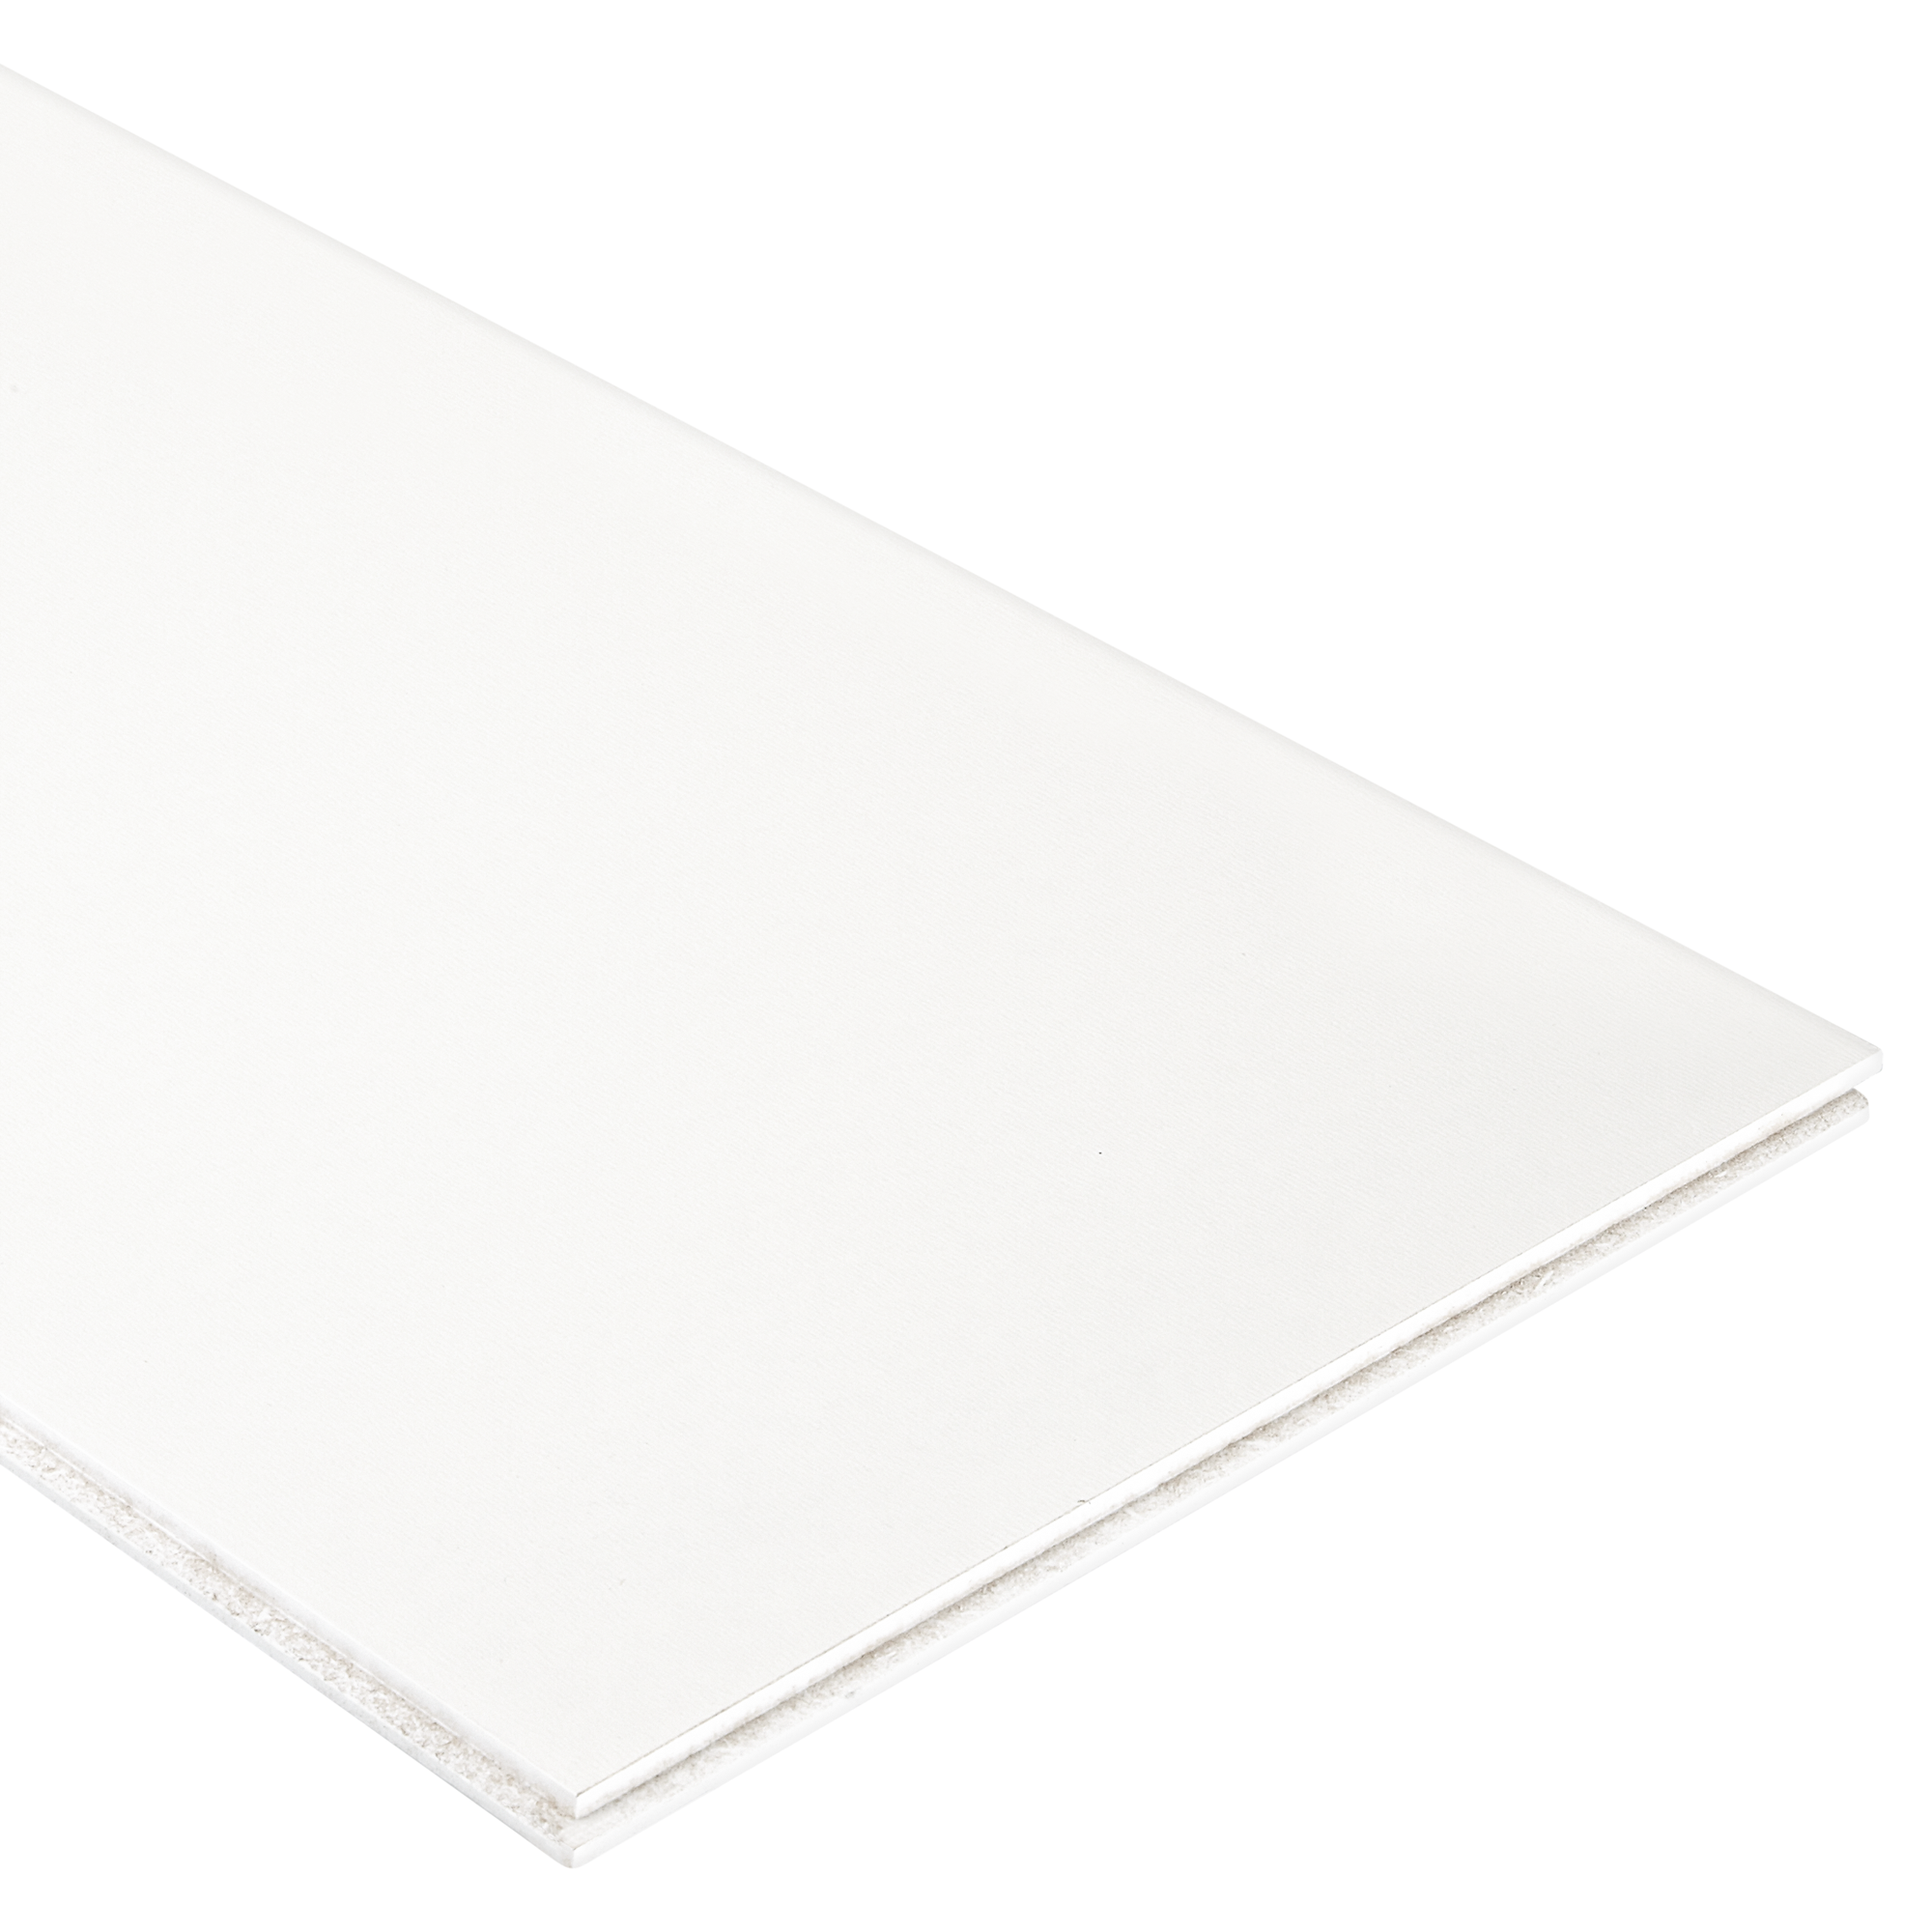 Lackpaneele 'Varnea' weiß 1,2 x 29 x 260 cm, 3 Stück + product picture